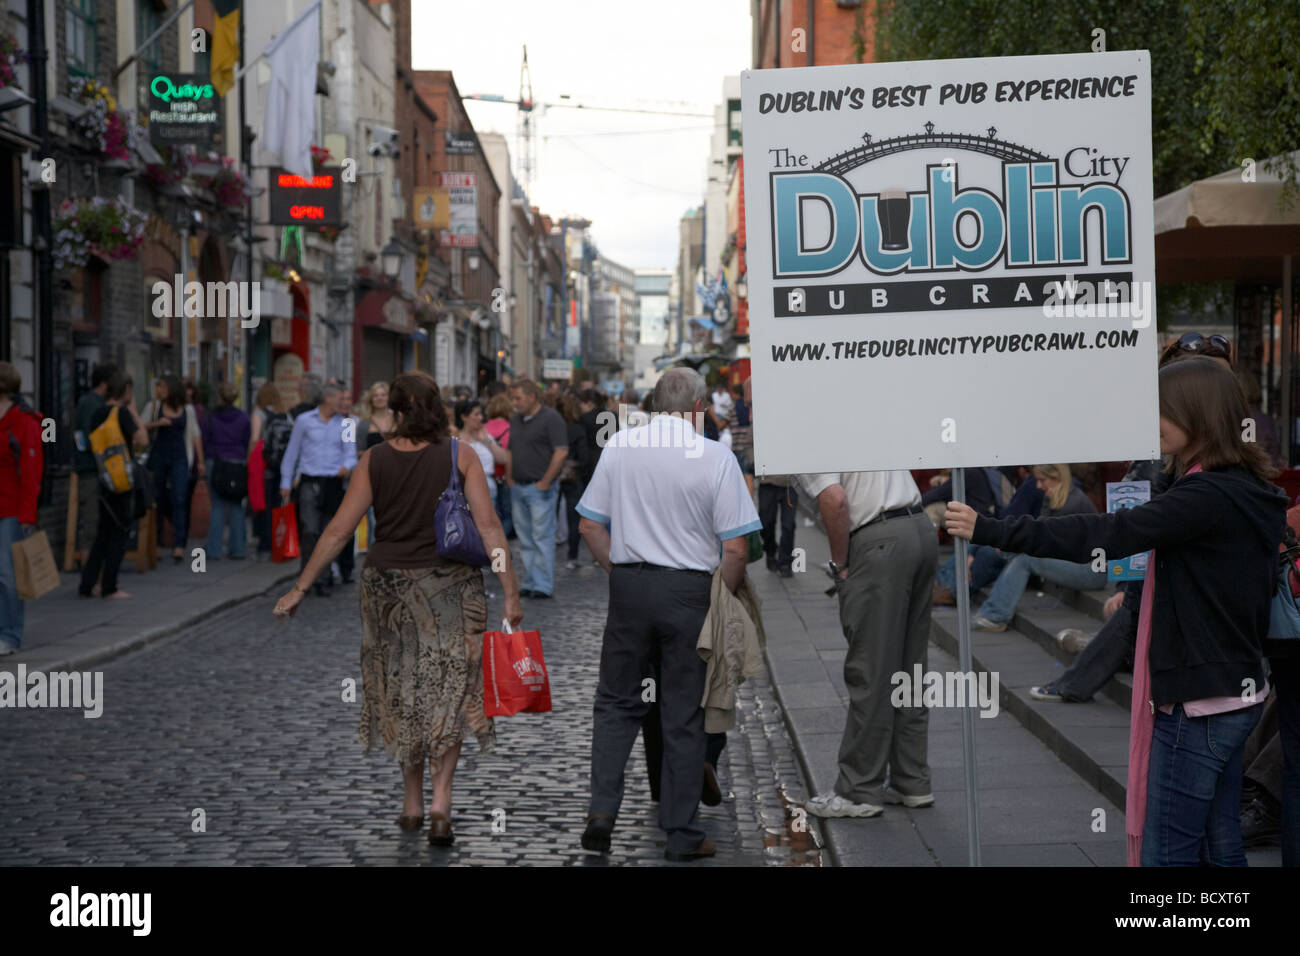 Anzeige für Dublin City Pub Crawl Touren in Temple Bar Square Dublin Irland Stockfoto